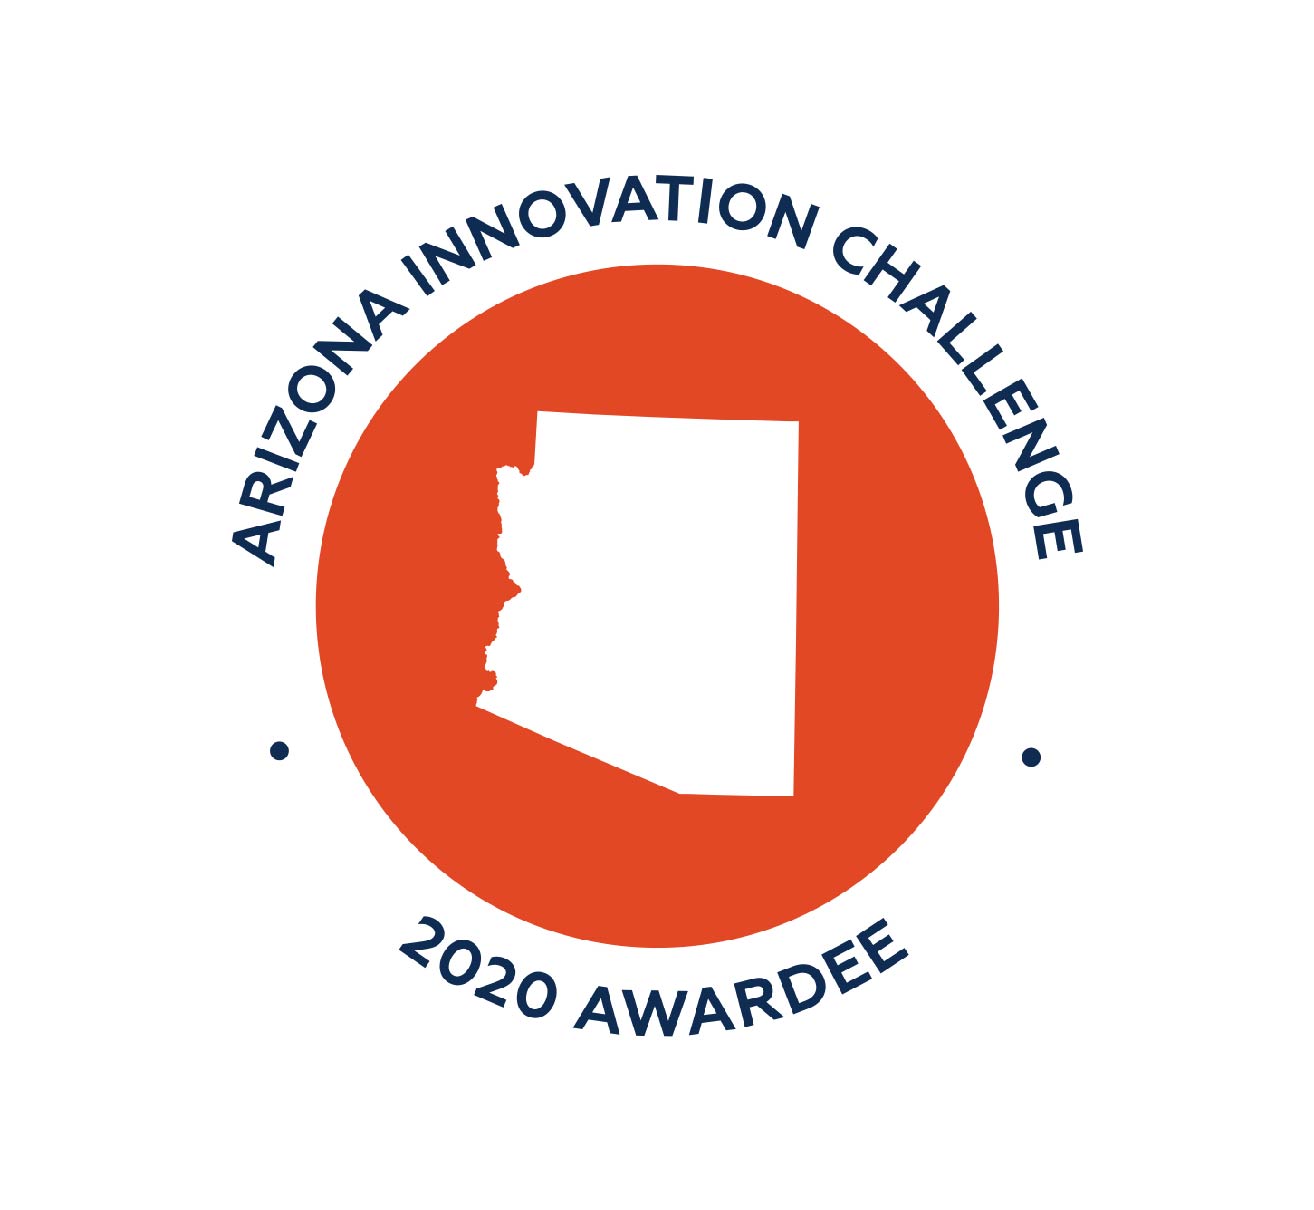 Arizona Innovation Challenge 2020 Awardee